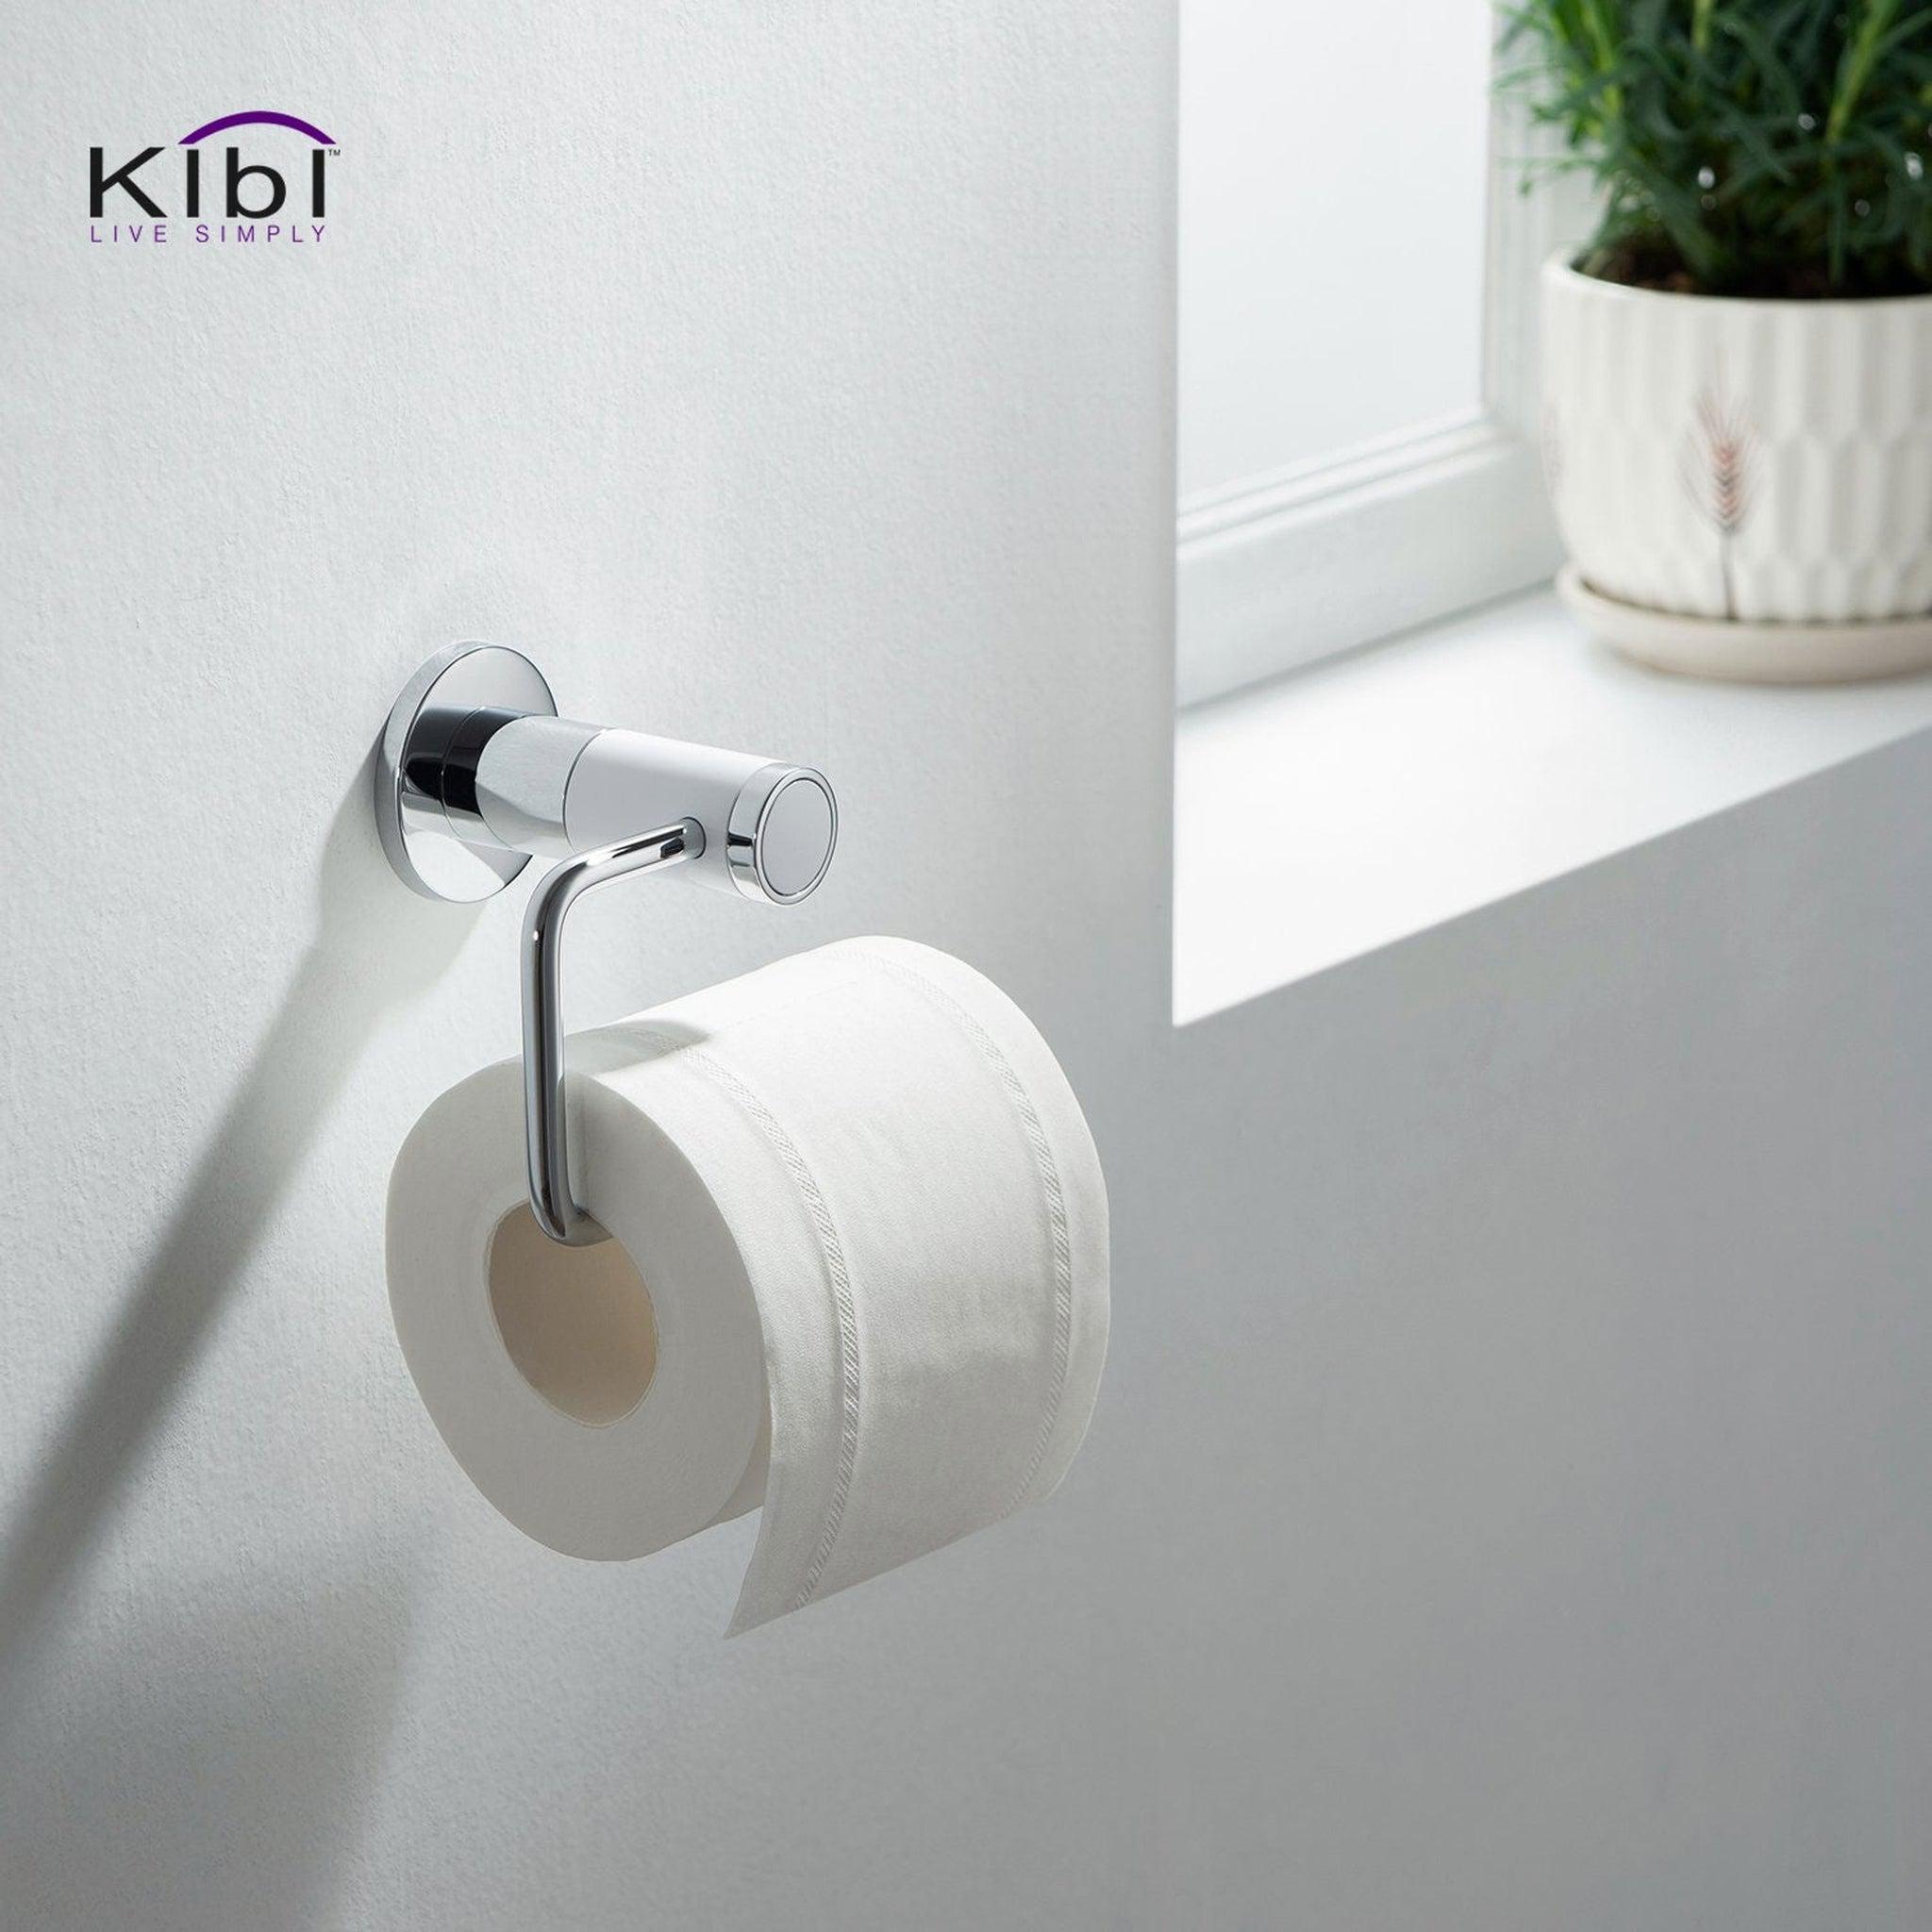 KIBI, KIBI Abaco Bathroom Tissue Holder in Chrome White Finish